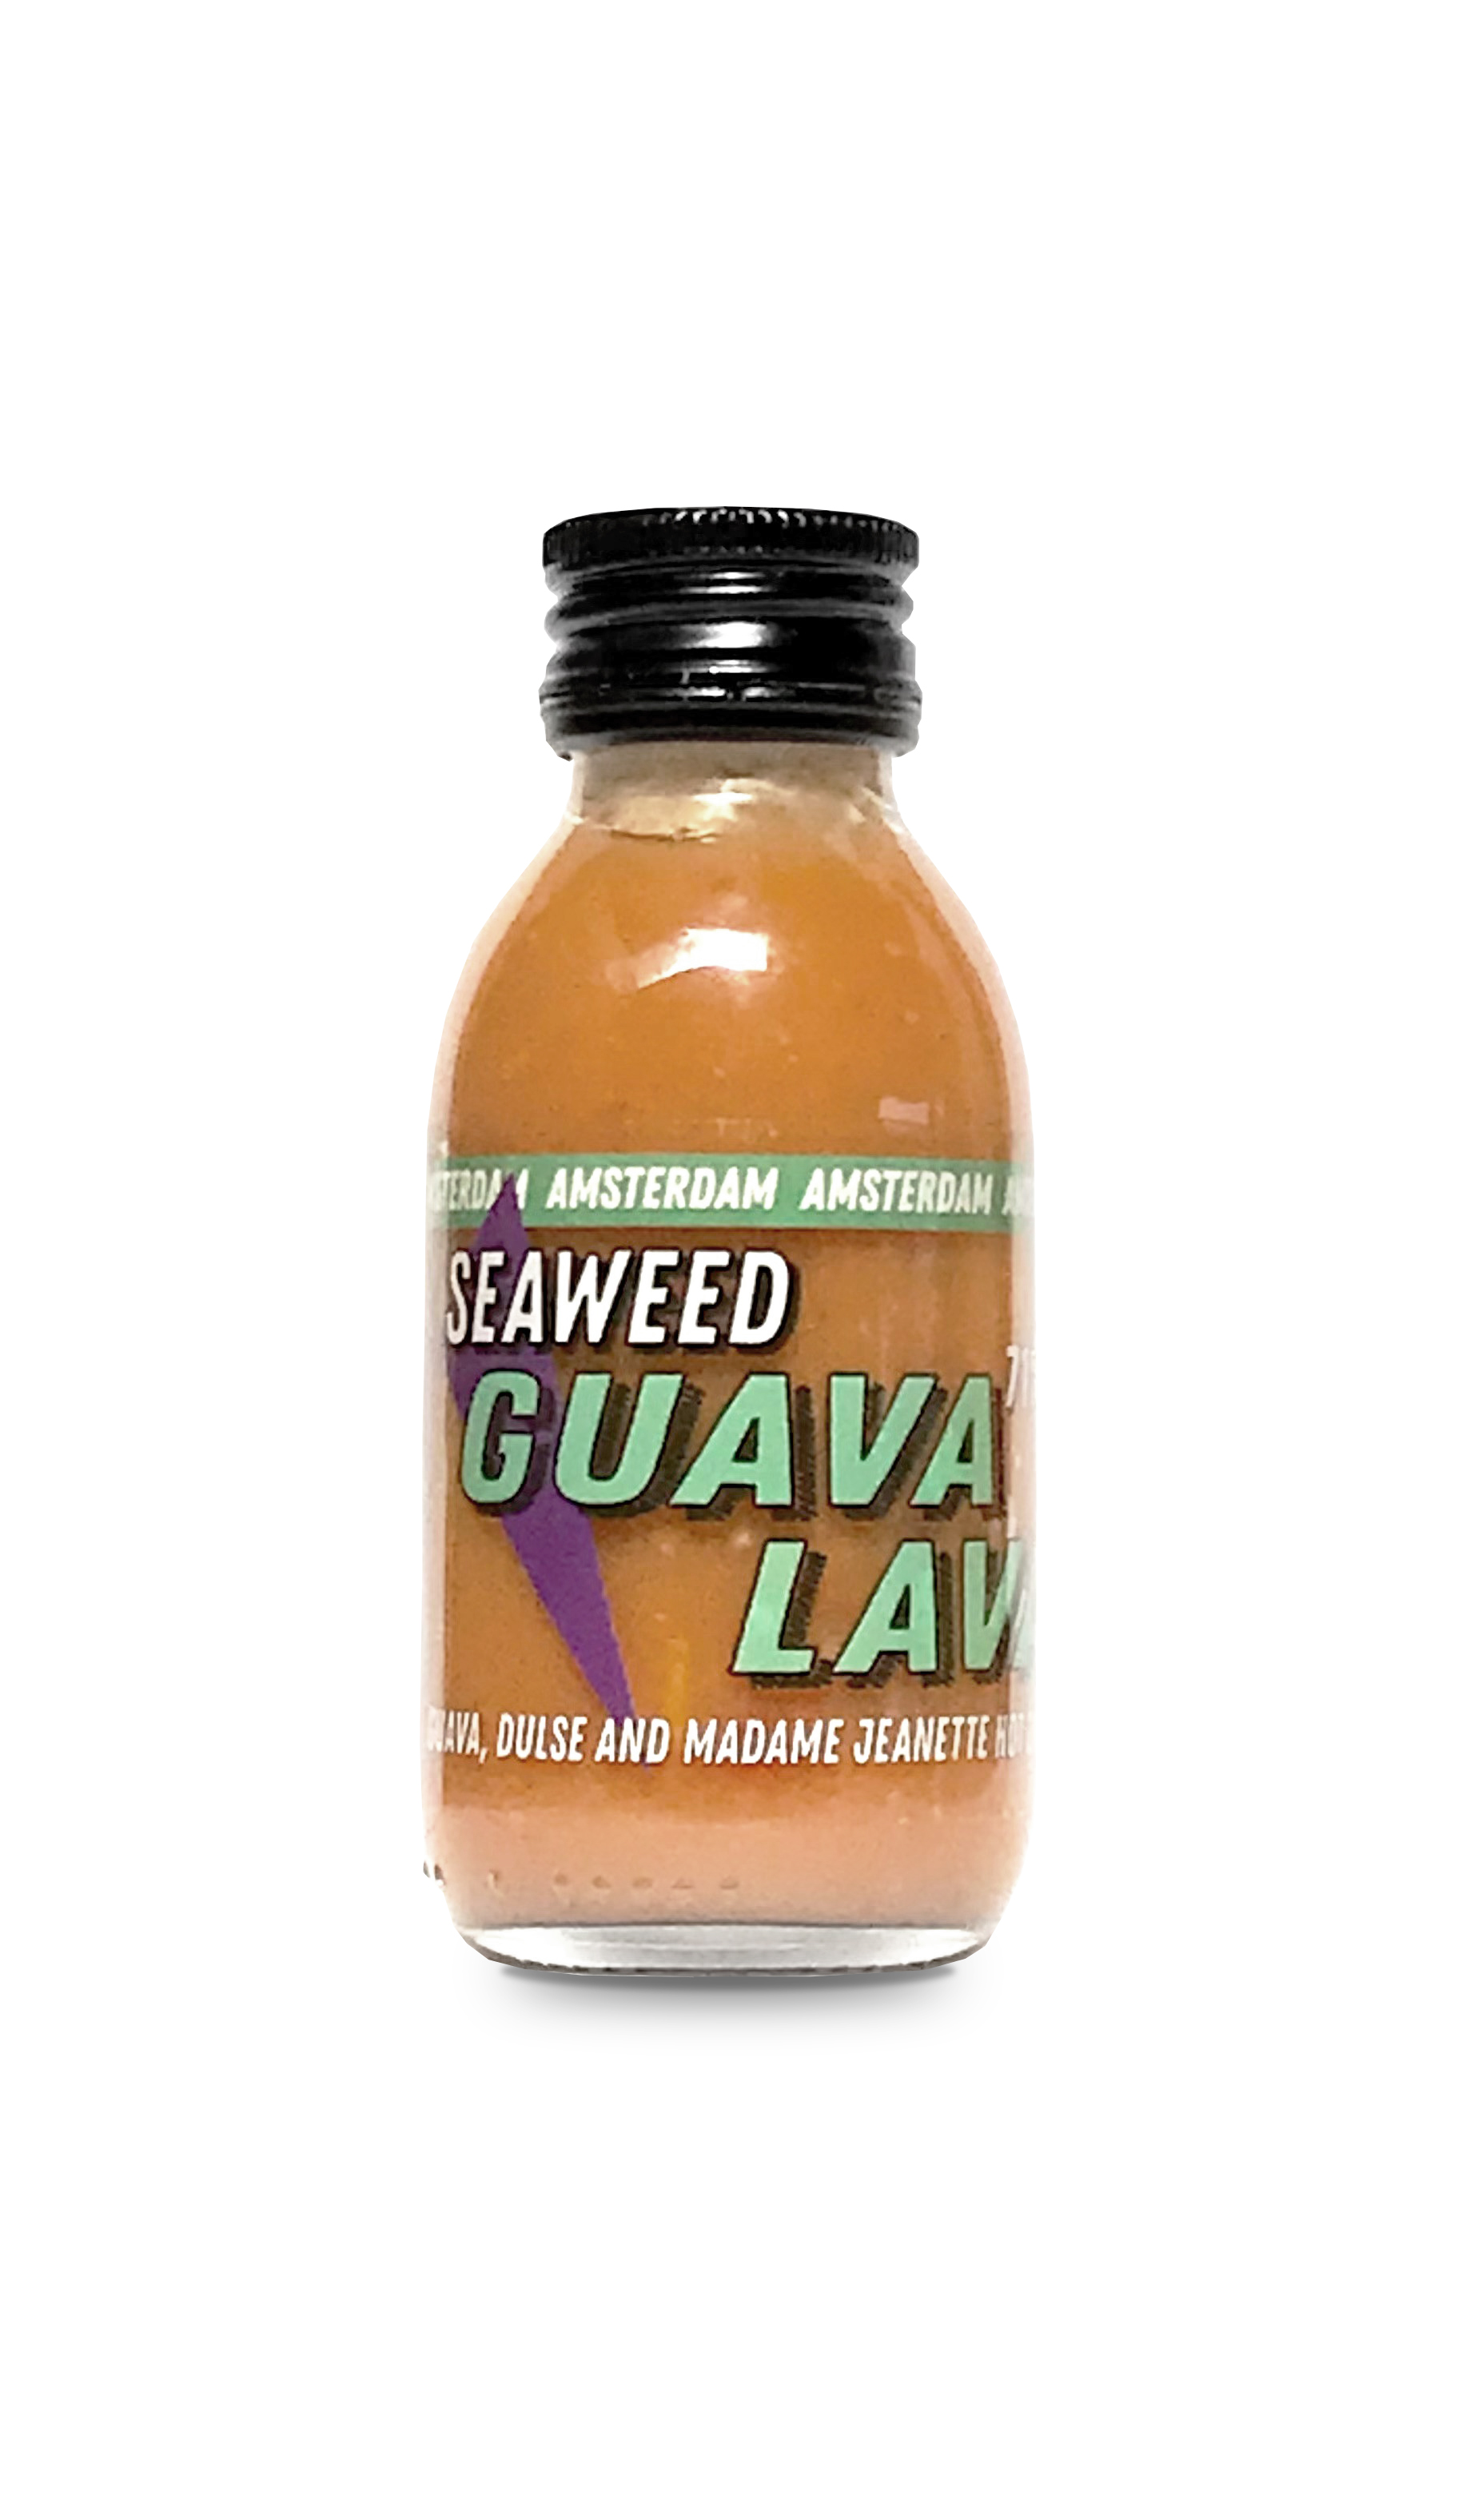 Seaweed guava hot sauce